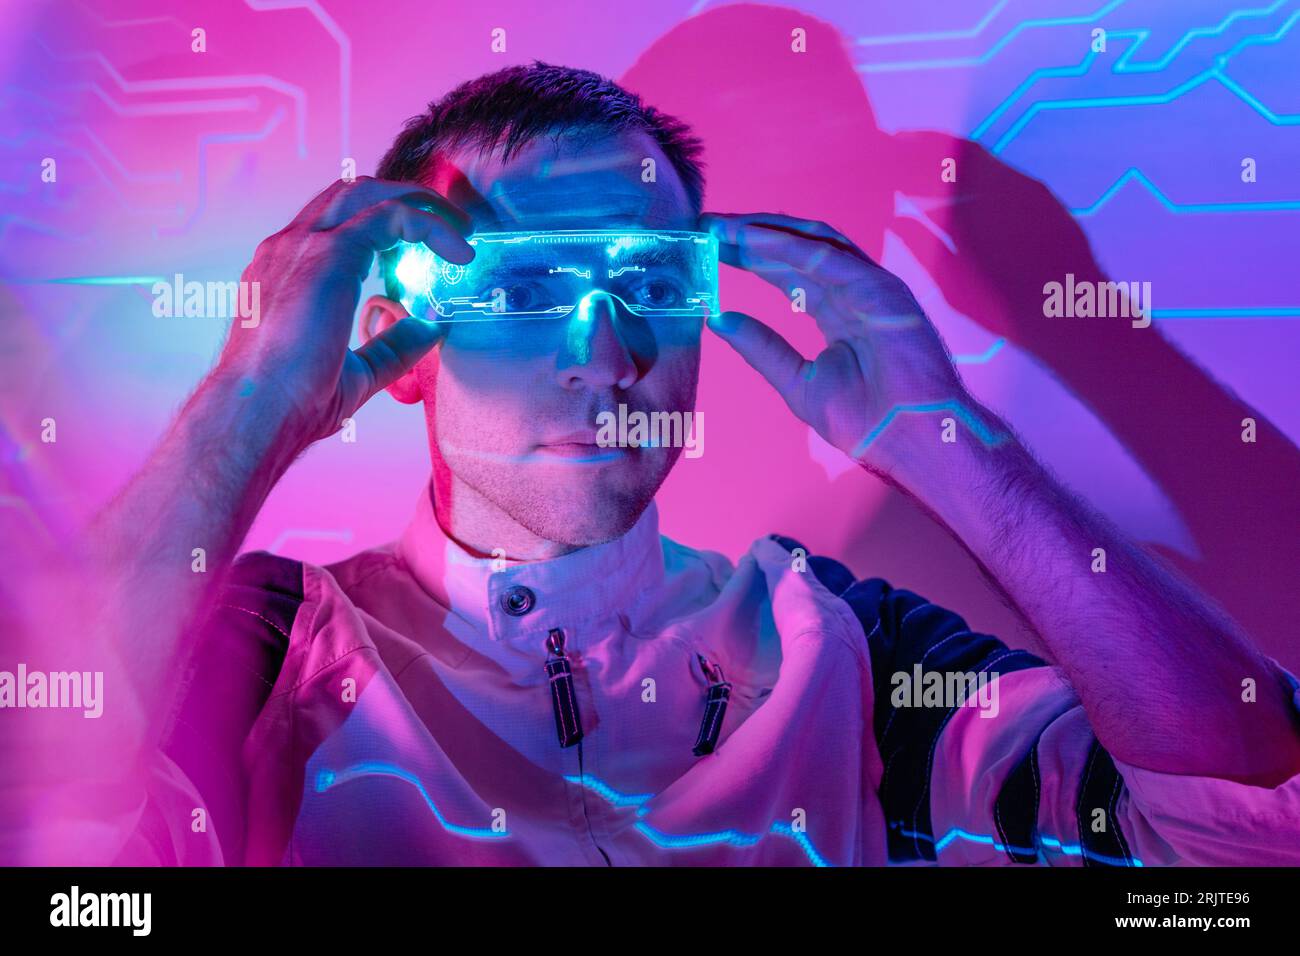 Man wearing smart glasses in neon lights Stock Photo